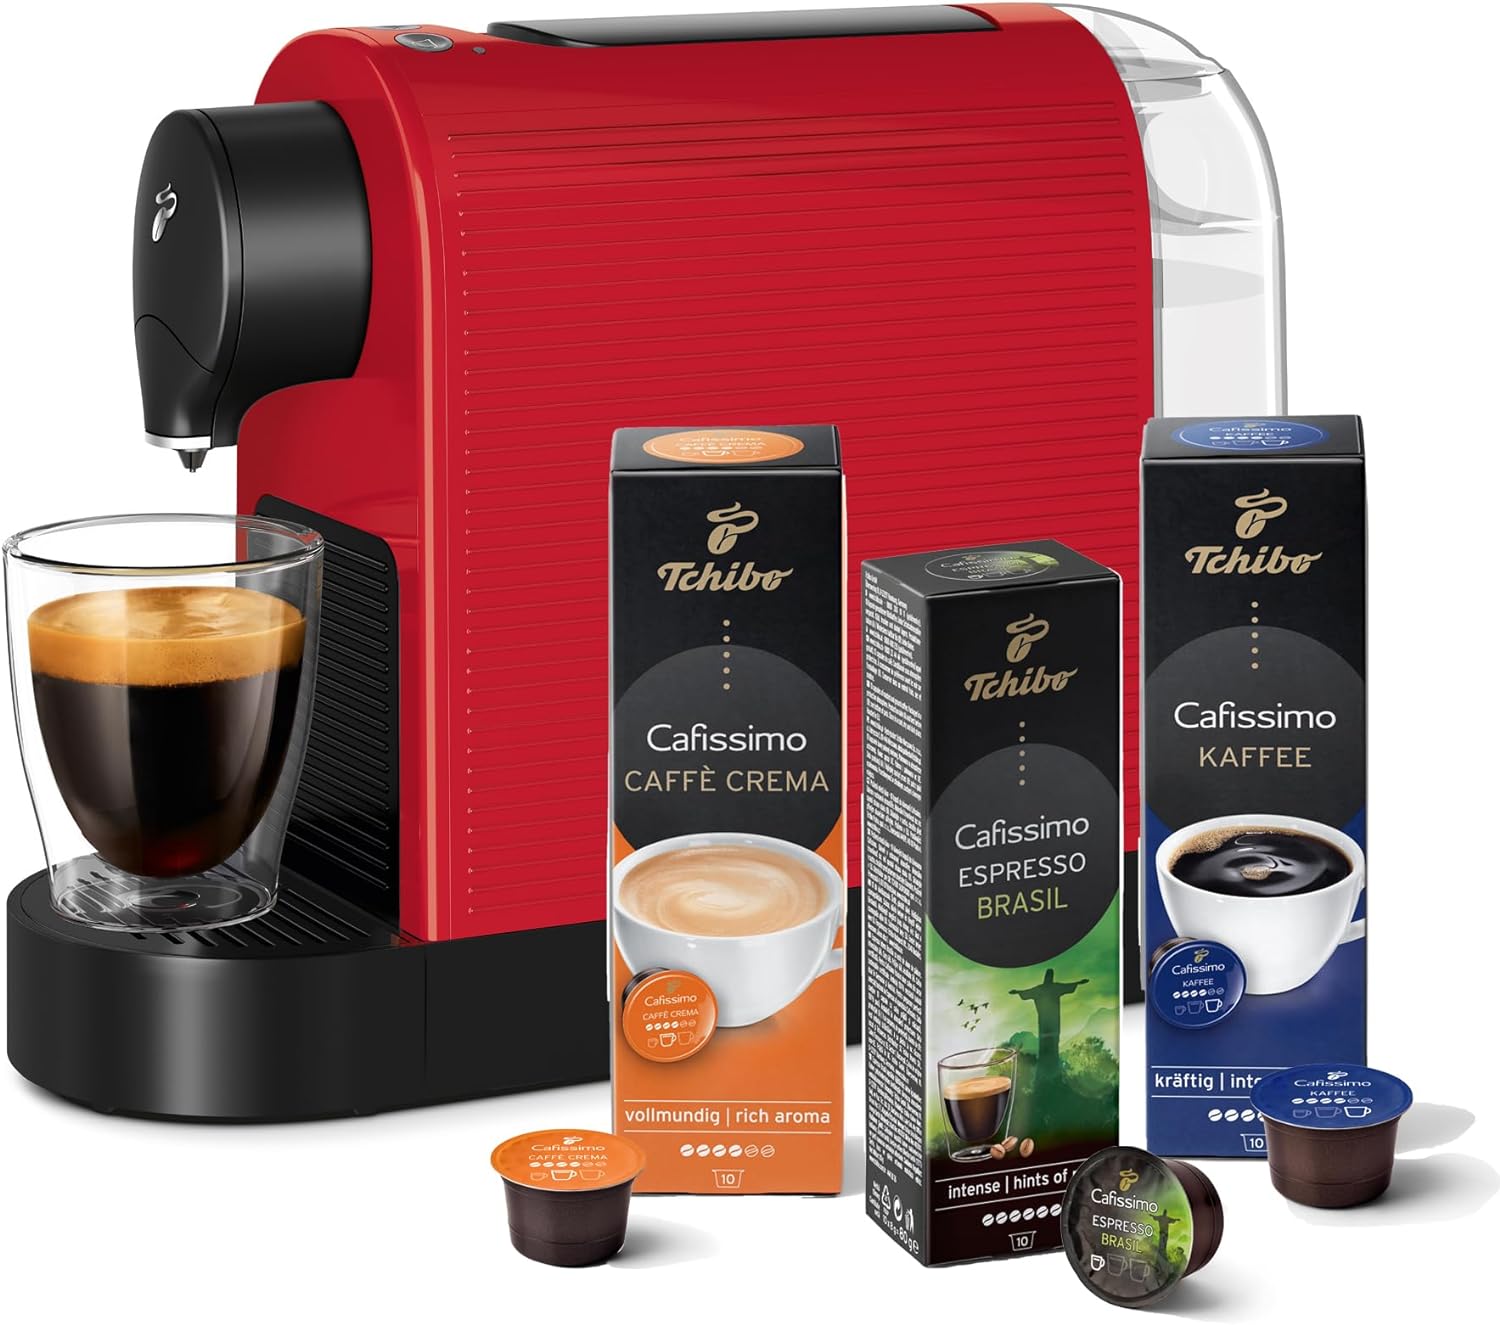 Tchibo Cafissimo Pure Plus Coffee Machine Capsule Machine Including 30 Capsules for Caffè Crema, Espresso and Coffee 0.8 L 1250 Watt 11.9 x 33.7 x 24 cm (Red)